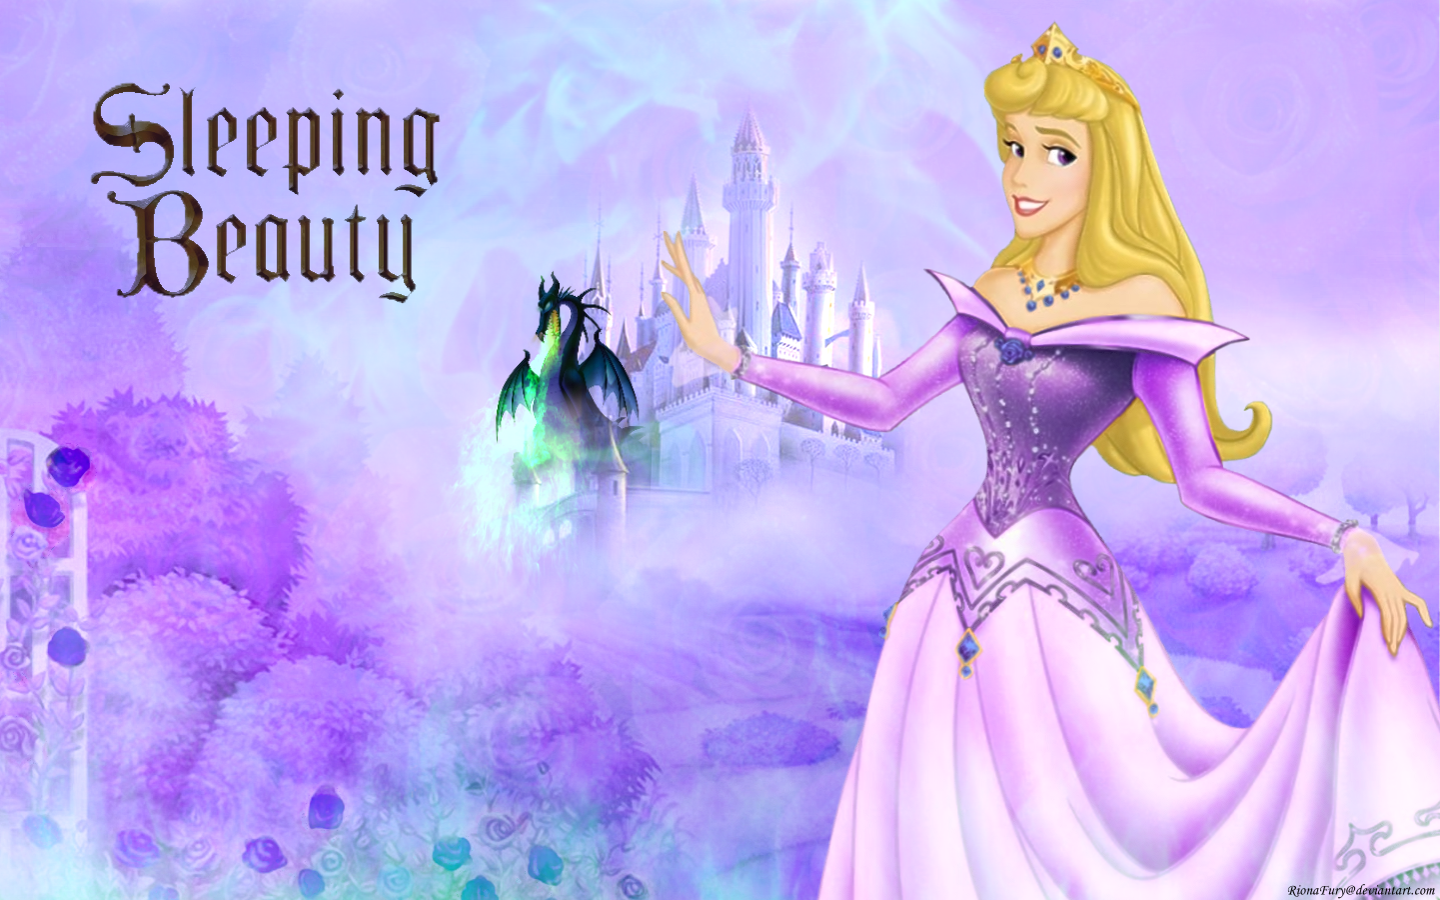 Disney Princess Wallpaper: Aurora in purple. Disney princess aurora, Disney princess wallpaper, Disney princess